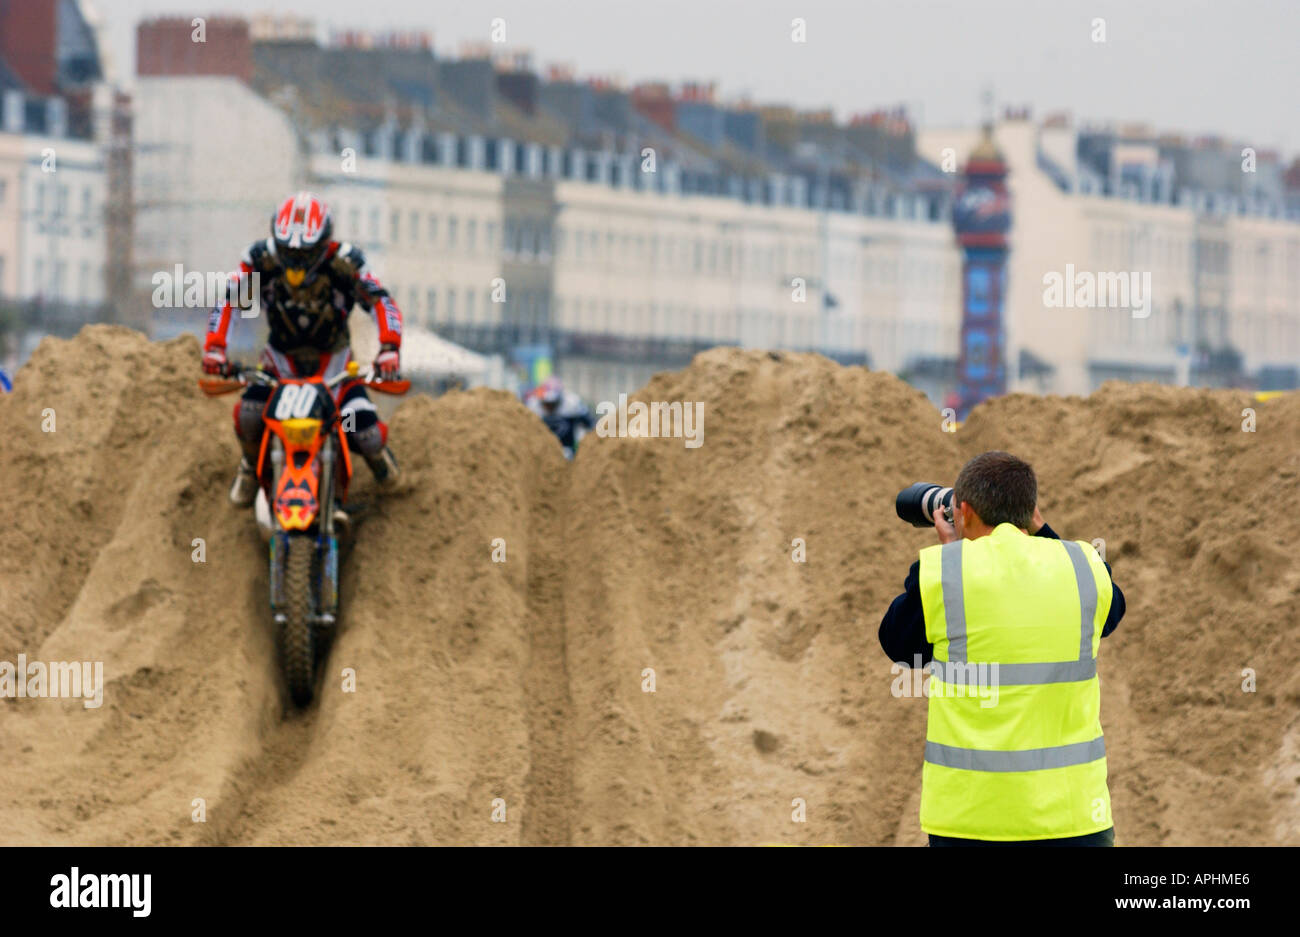 Sport-Fotograf arbeitet bei einem Motocross-event Stockfoto